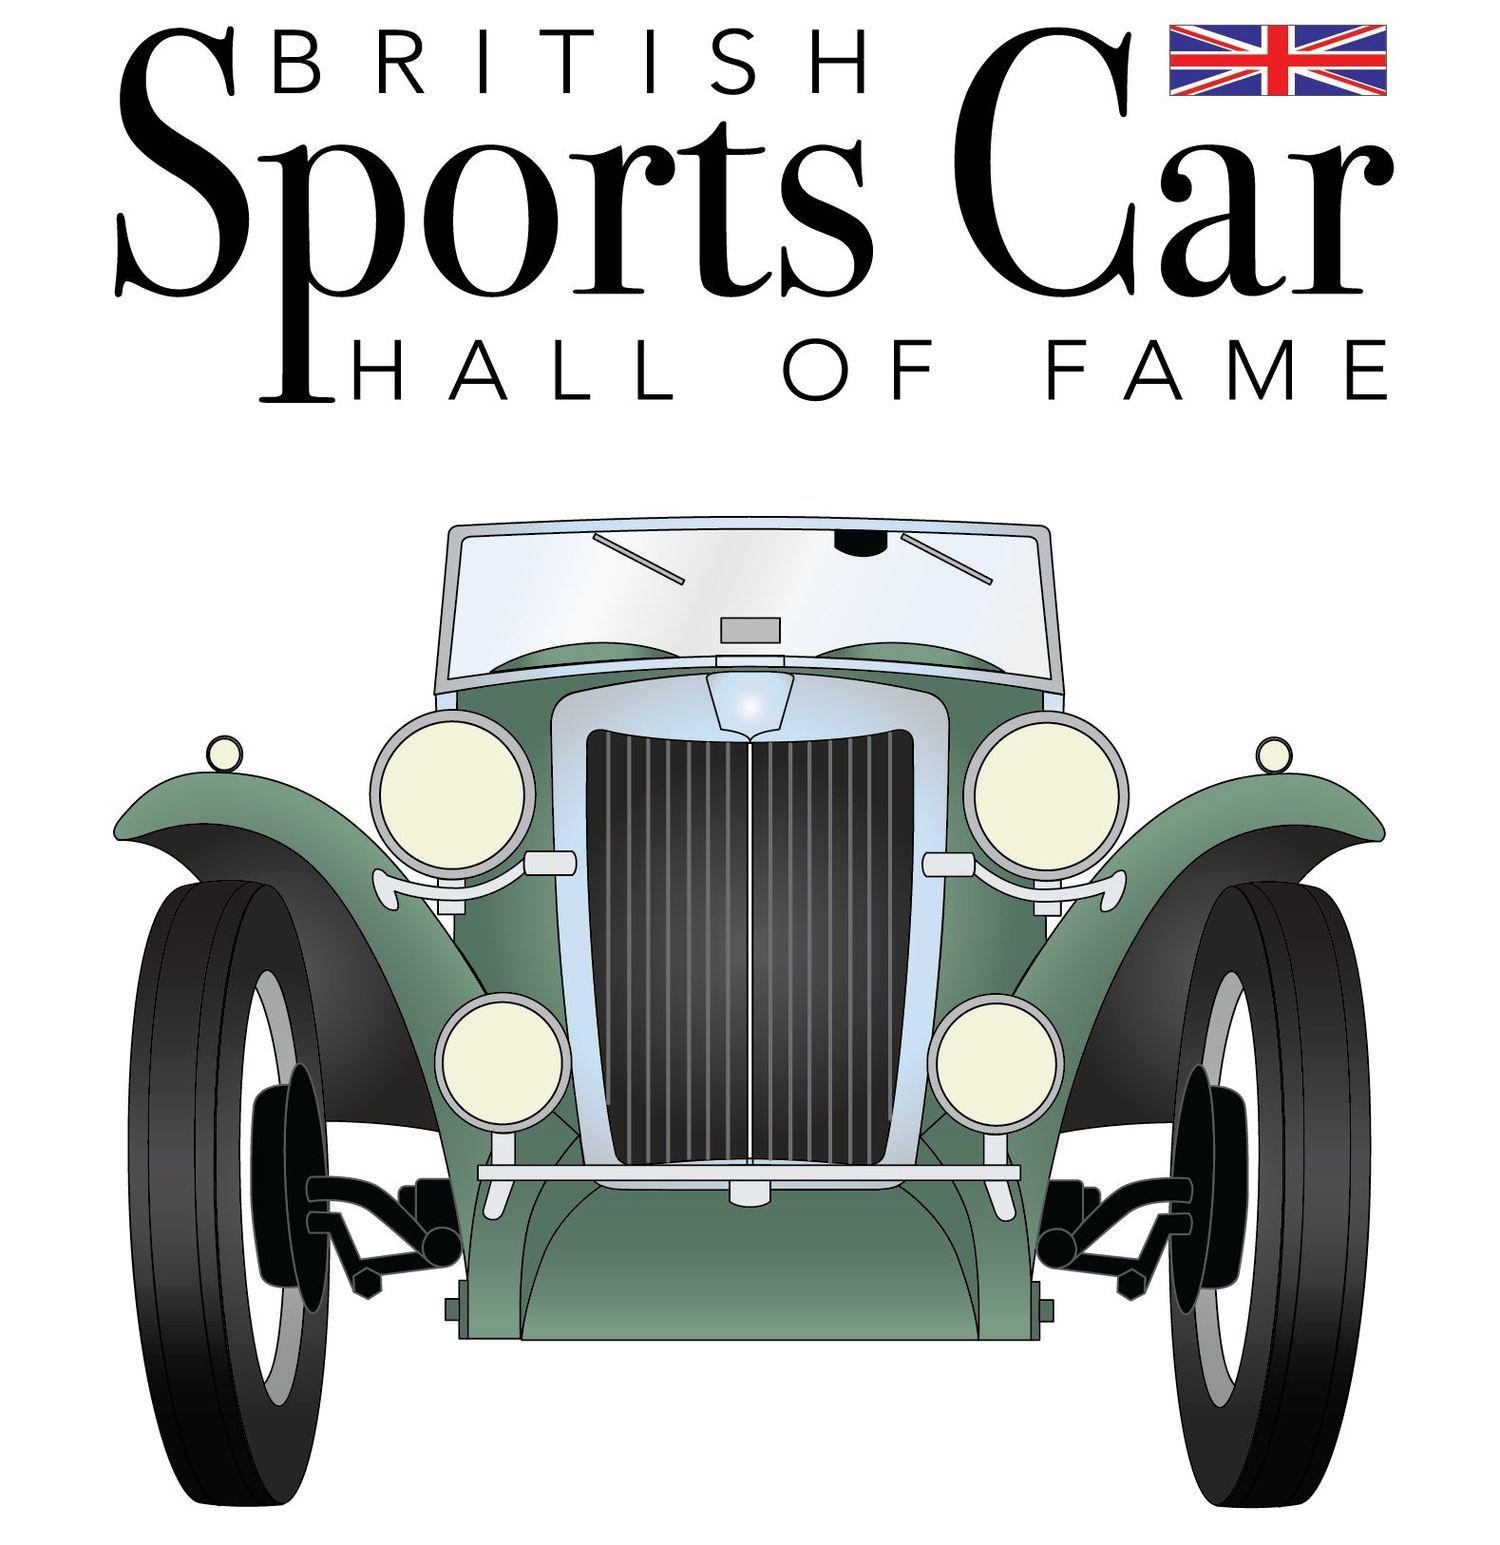 British Sports Car Logo - The British Sports Car Hall of Fame announces its inaugura ...